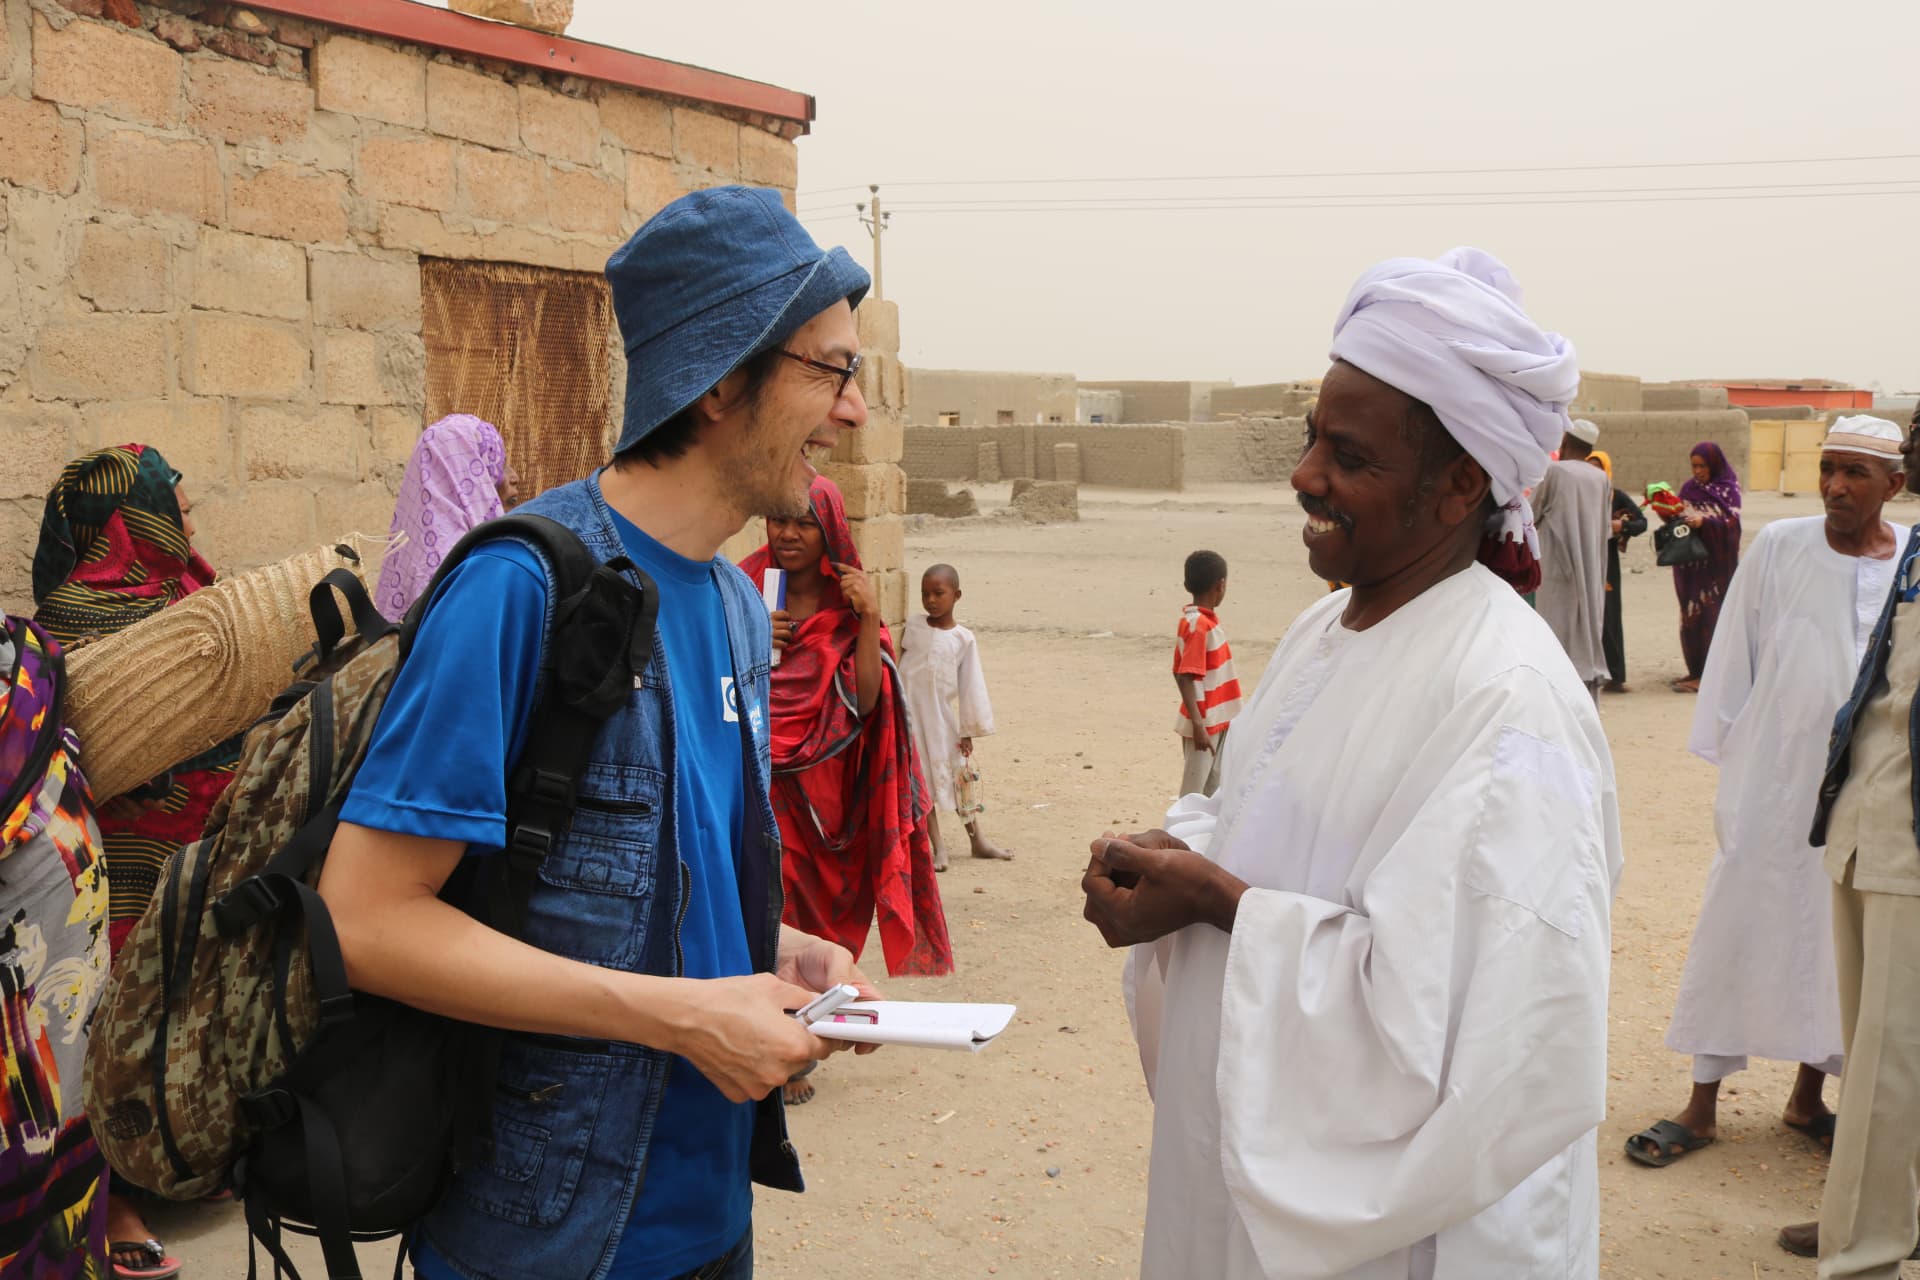 Hiroaki Umano of Plan International, on the left, working in Sudan